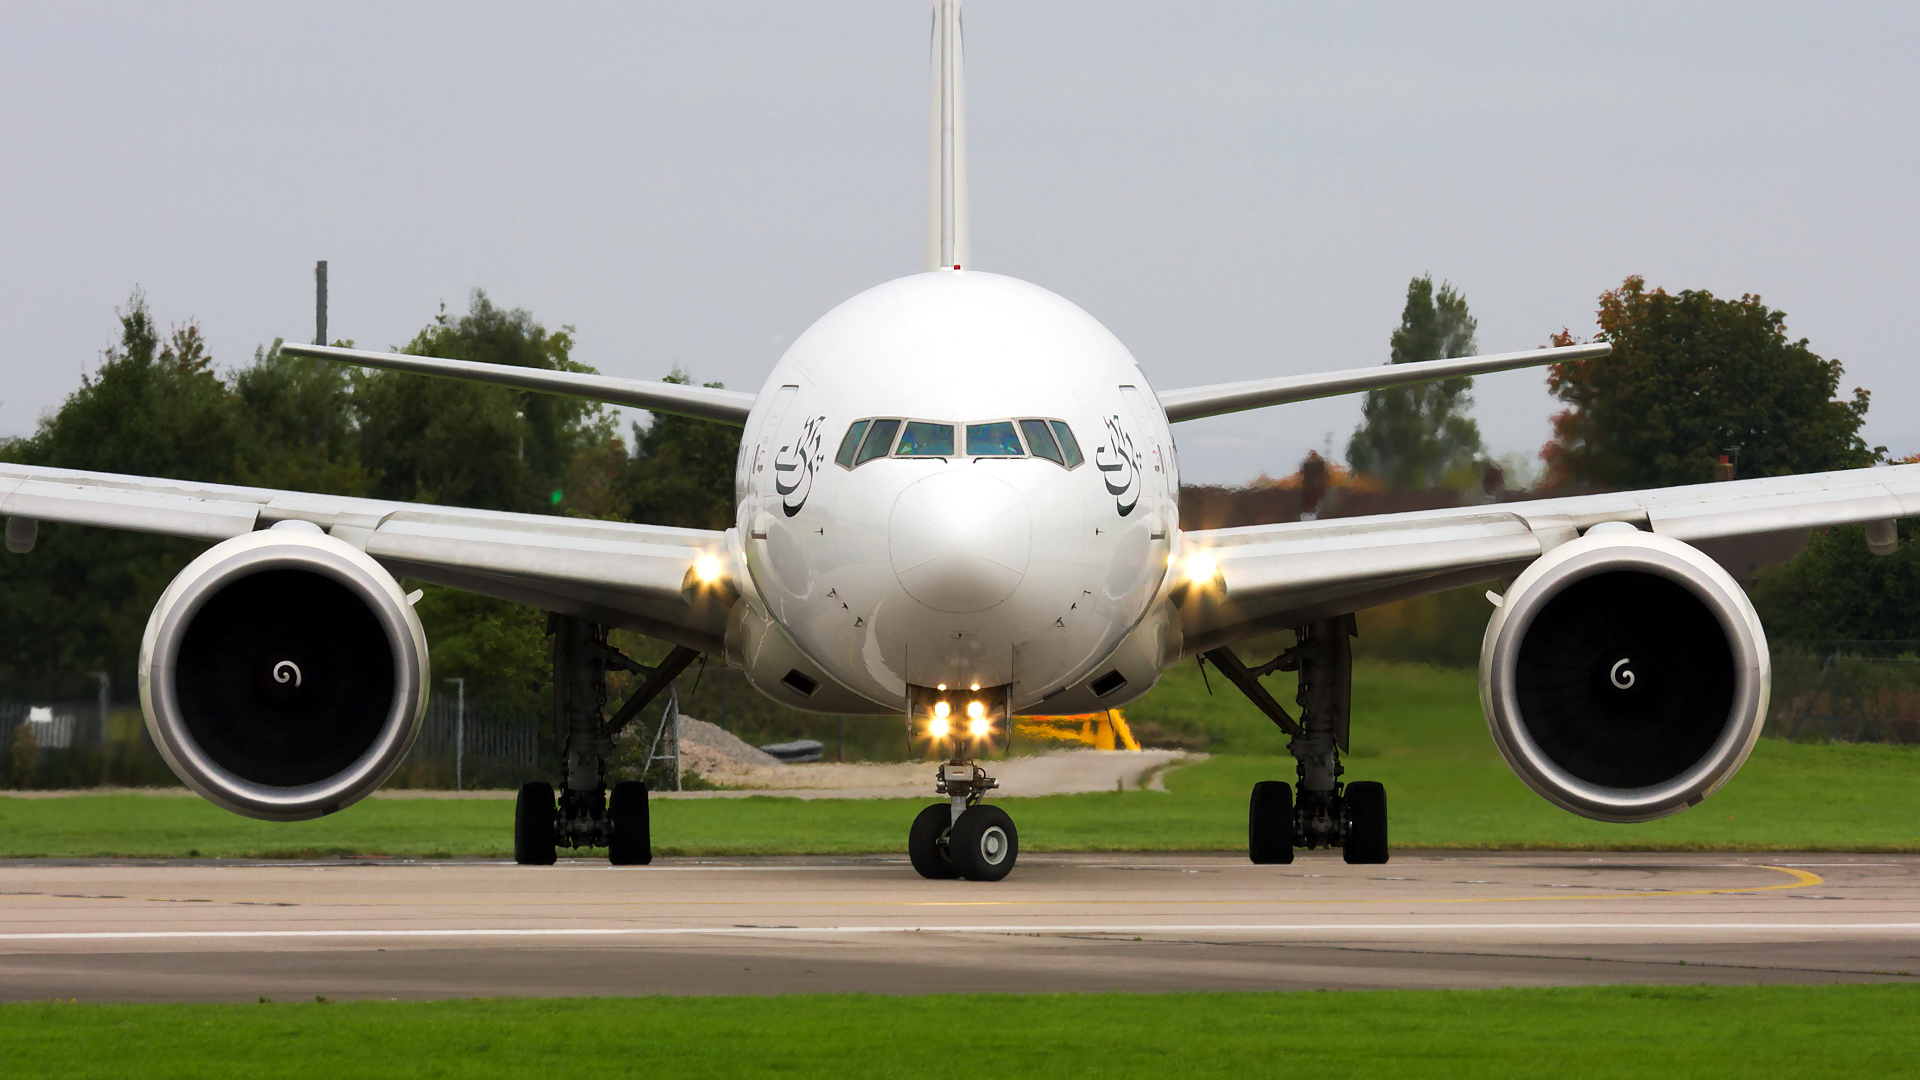 AP-BGZ ✈ Pakistan International Airlines Boeing 777-240LR @ Manchester